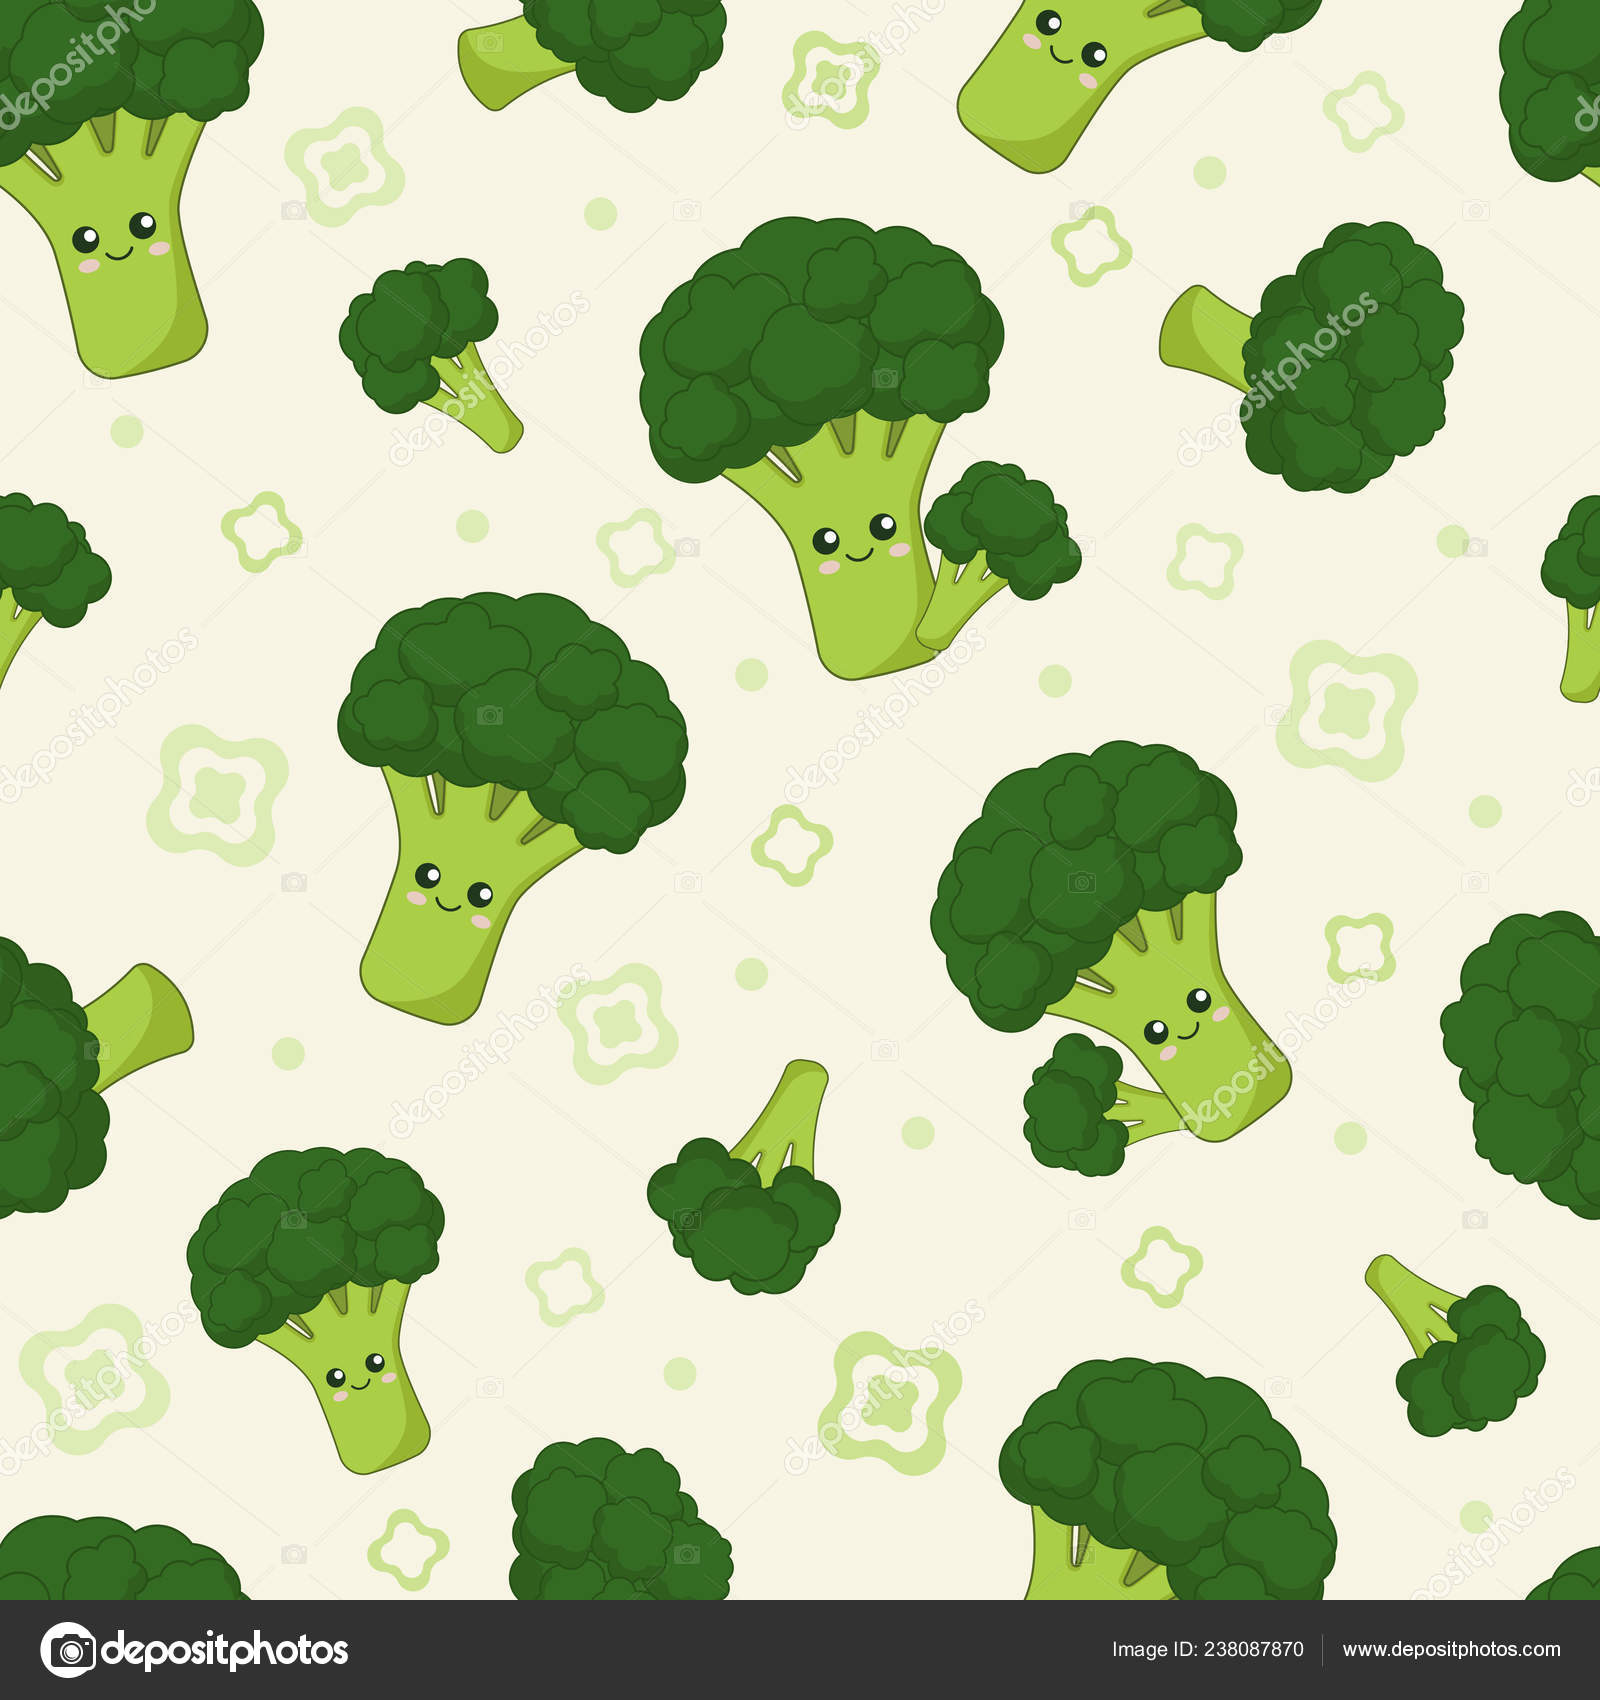 Featured image of post Cartoon Cute Kawaii Vegetables Alibaba com offers 4 287 cartoon kawaii products